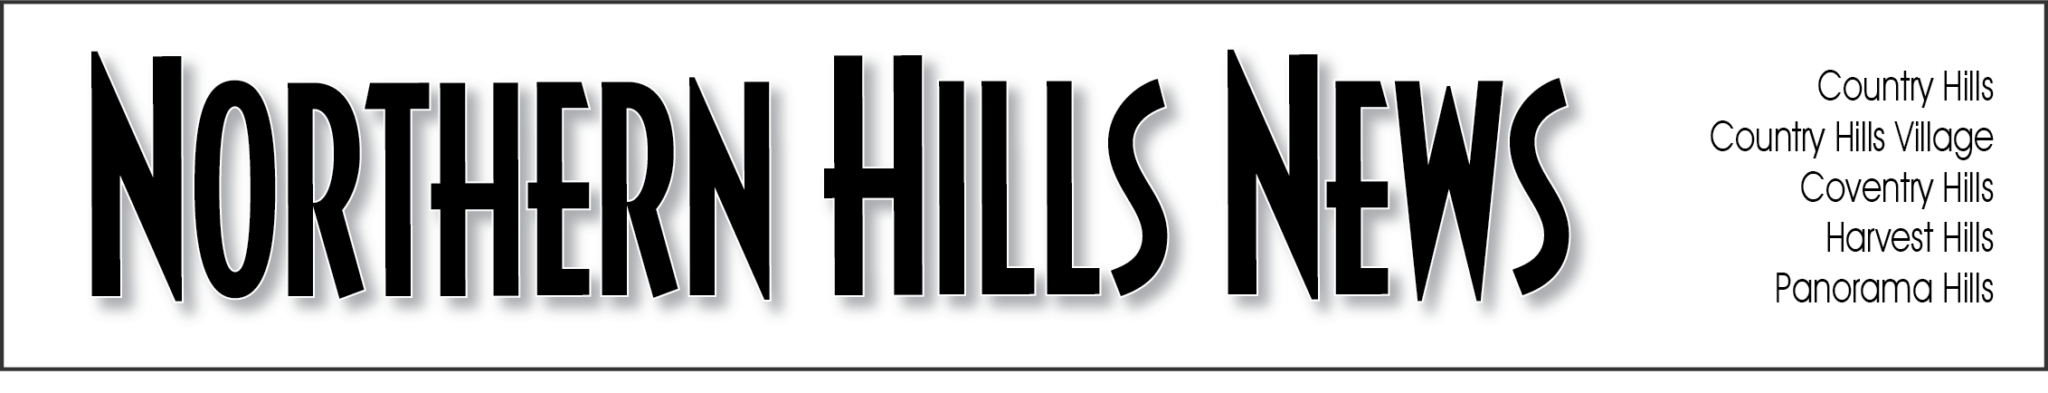 Northern Hills News – Northern Hills Community Association